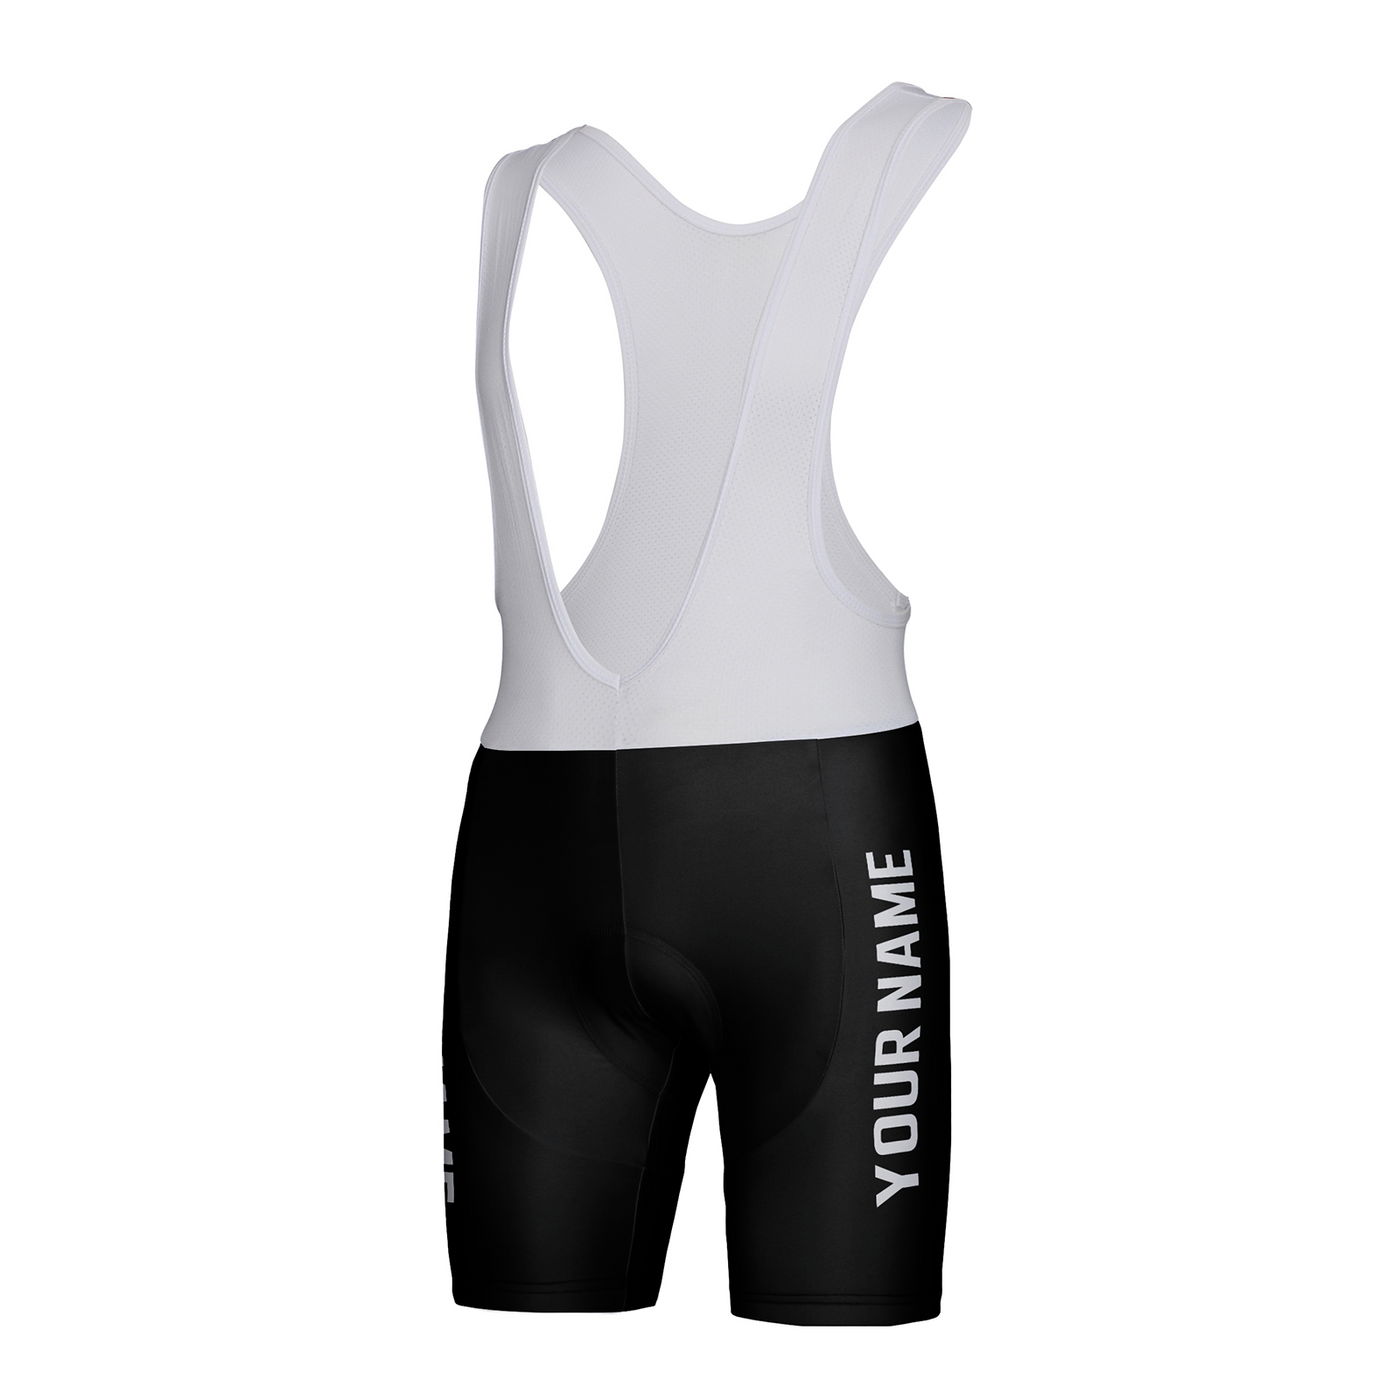 Customized Las Vegas Team Unisex Cycling Bib Shorts